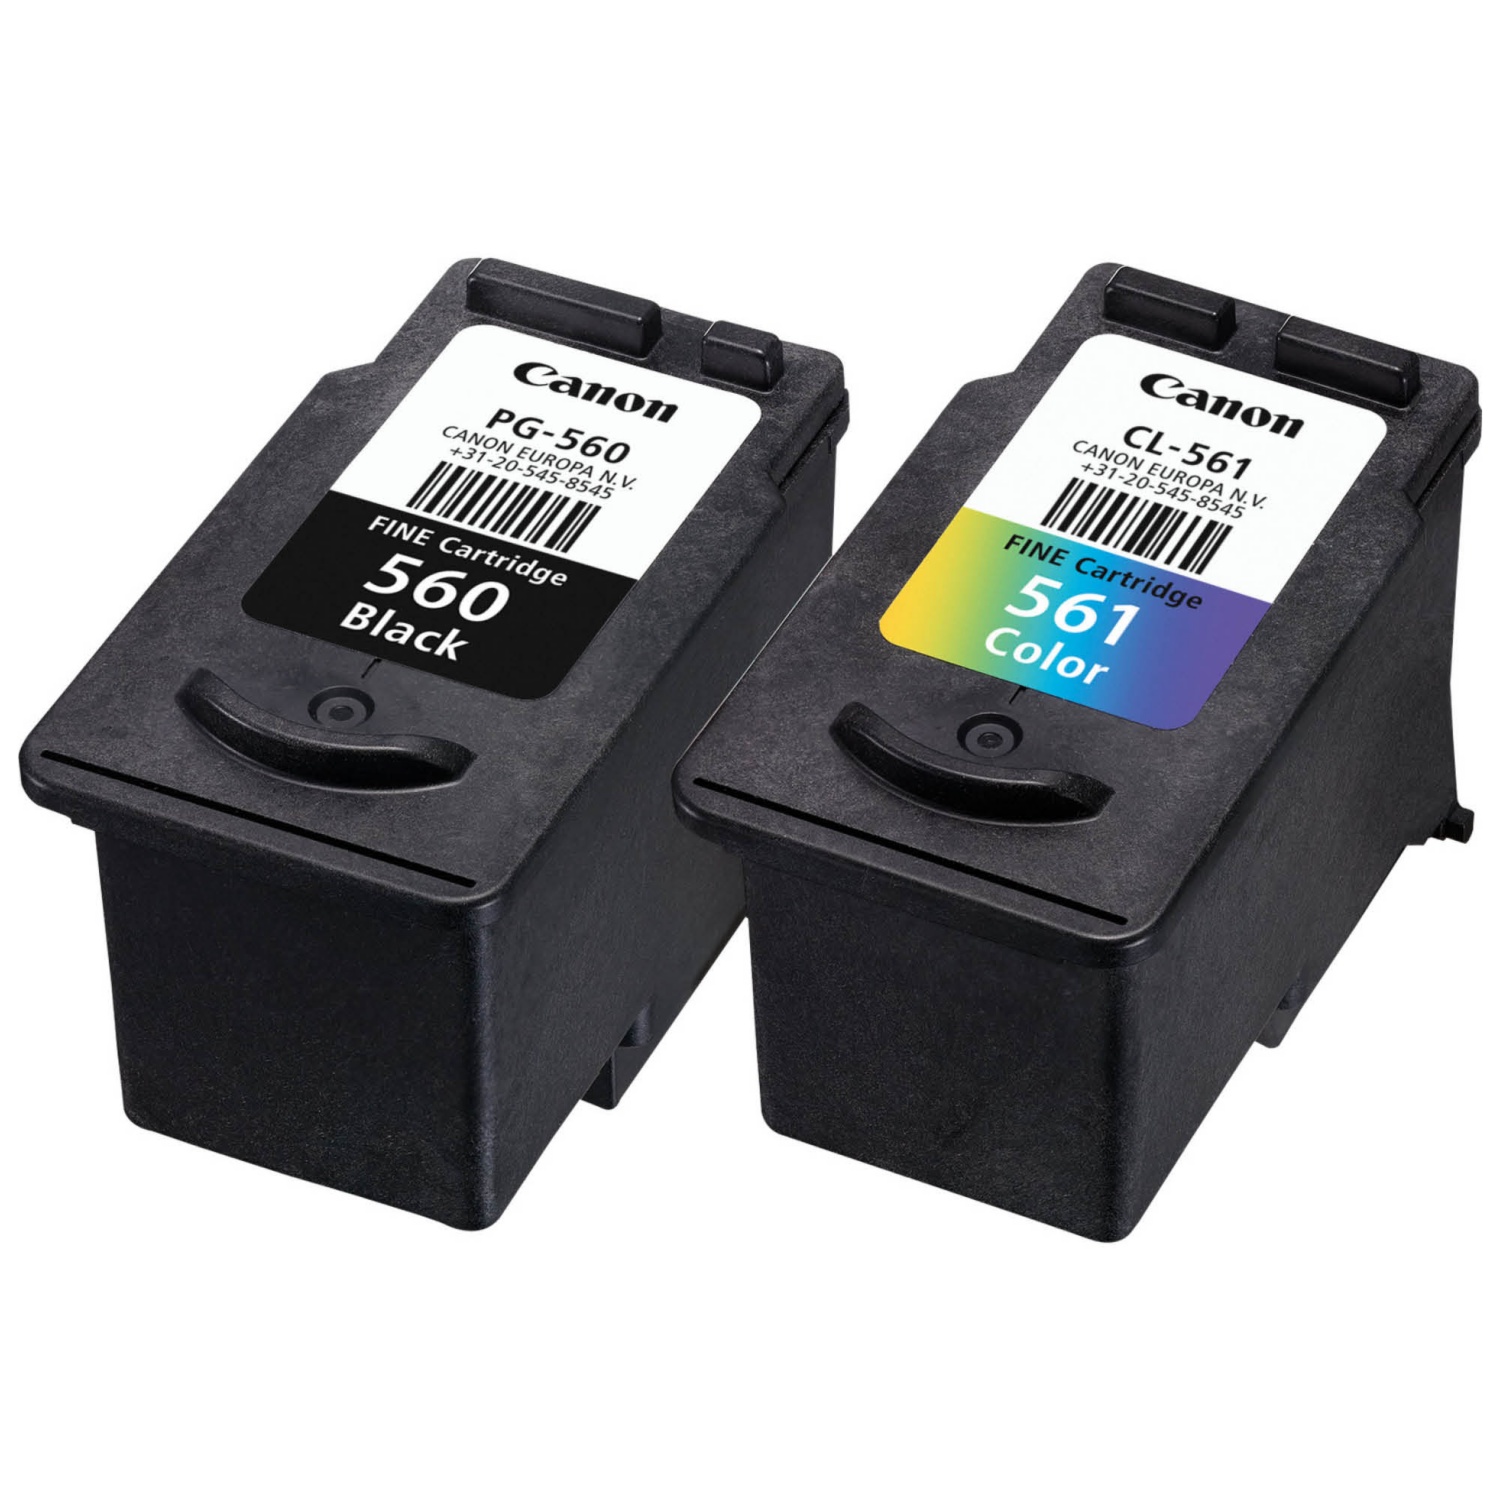 CANON Imprimante PIXMA TS7450a black + PG-560/CL-561 Multipack